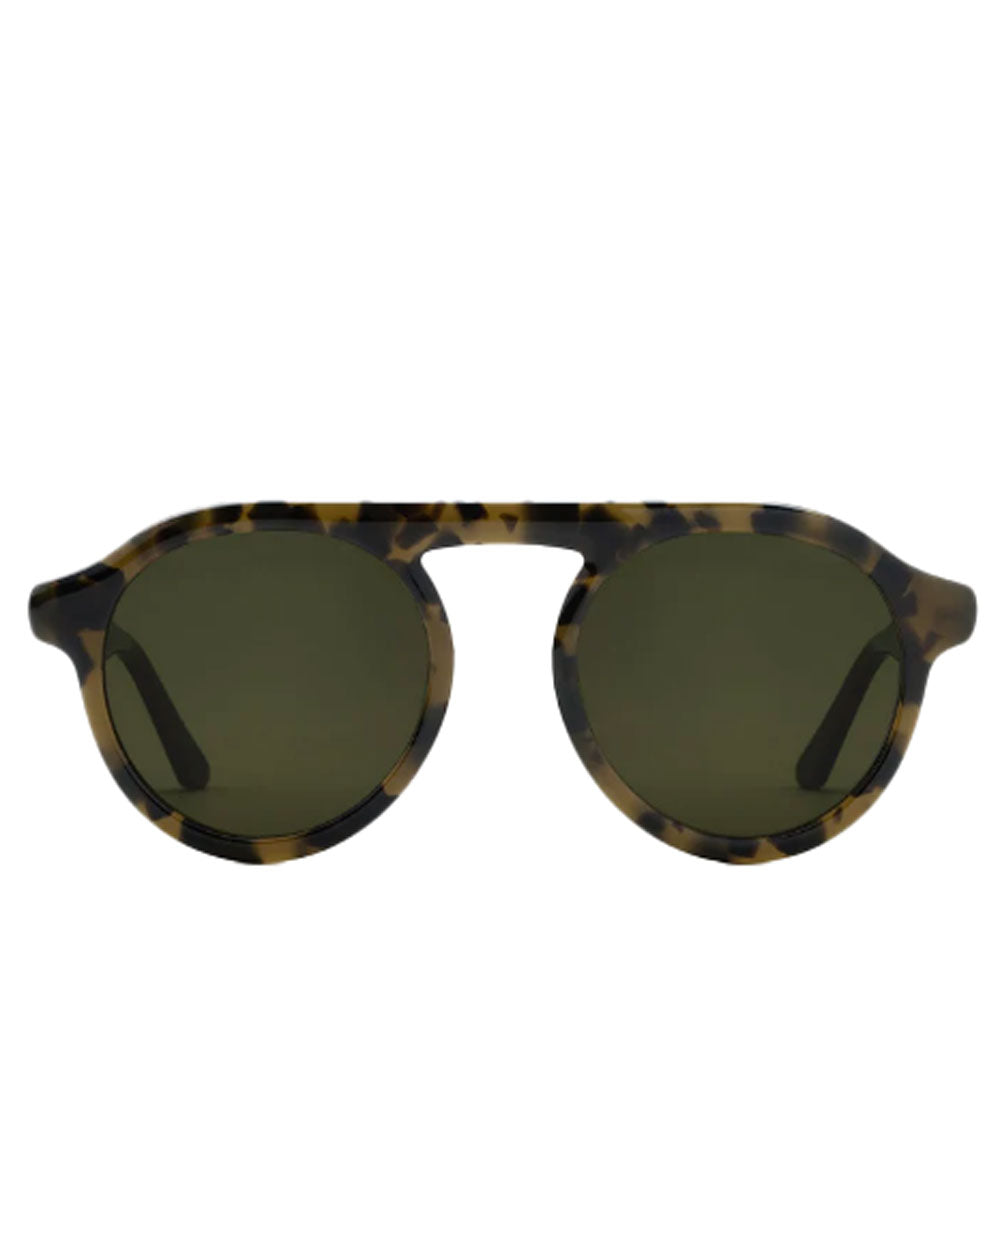 Cameron Polarized Sunglasses in Tortuga